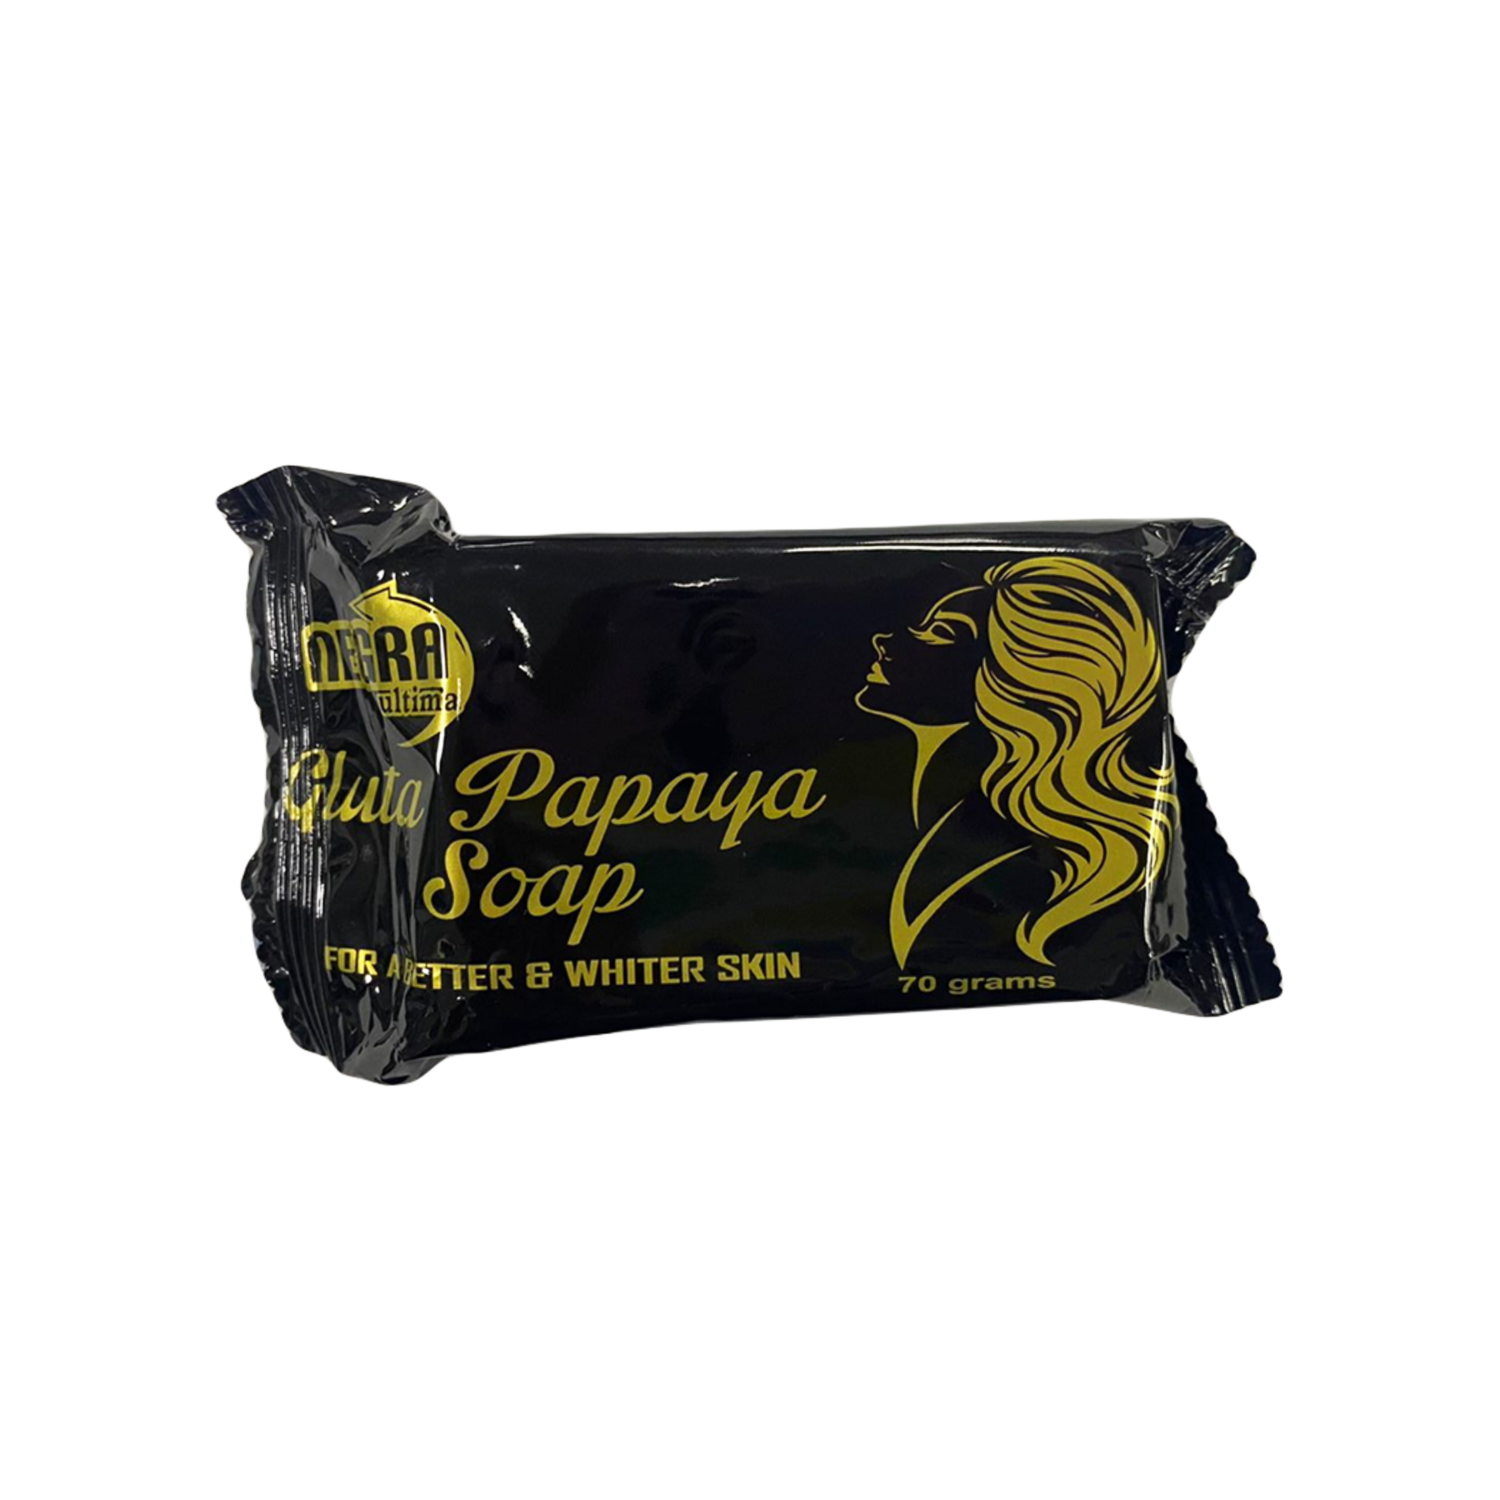 Negra Gluta Papaya Soap 70g